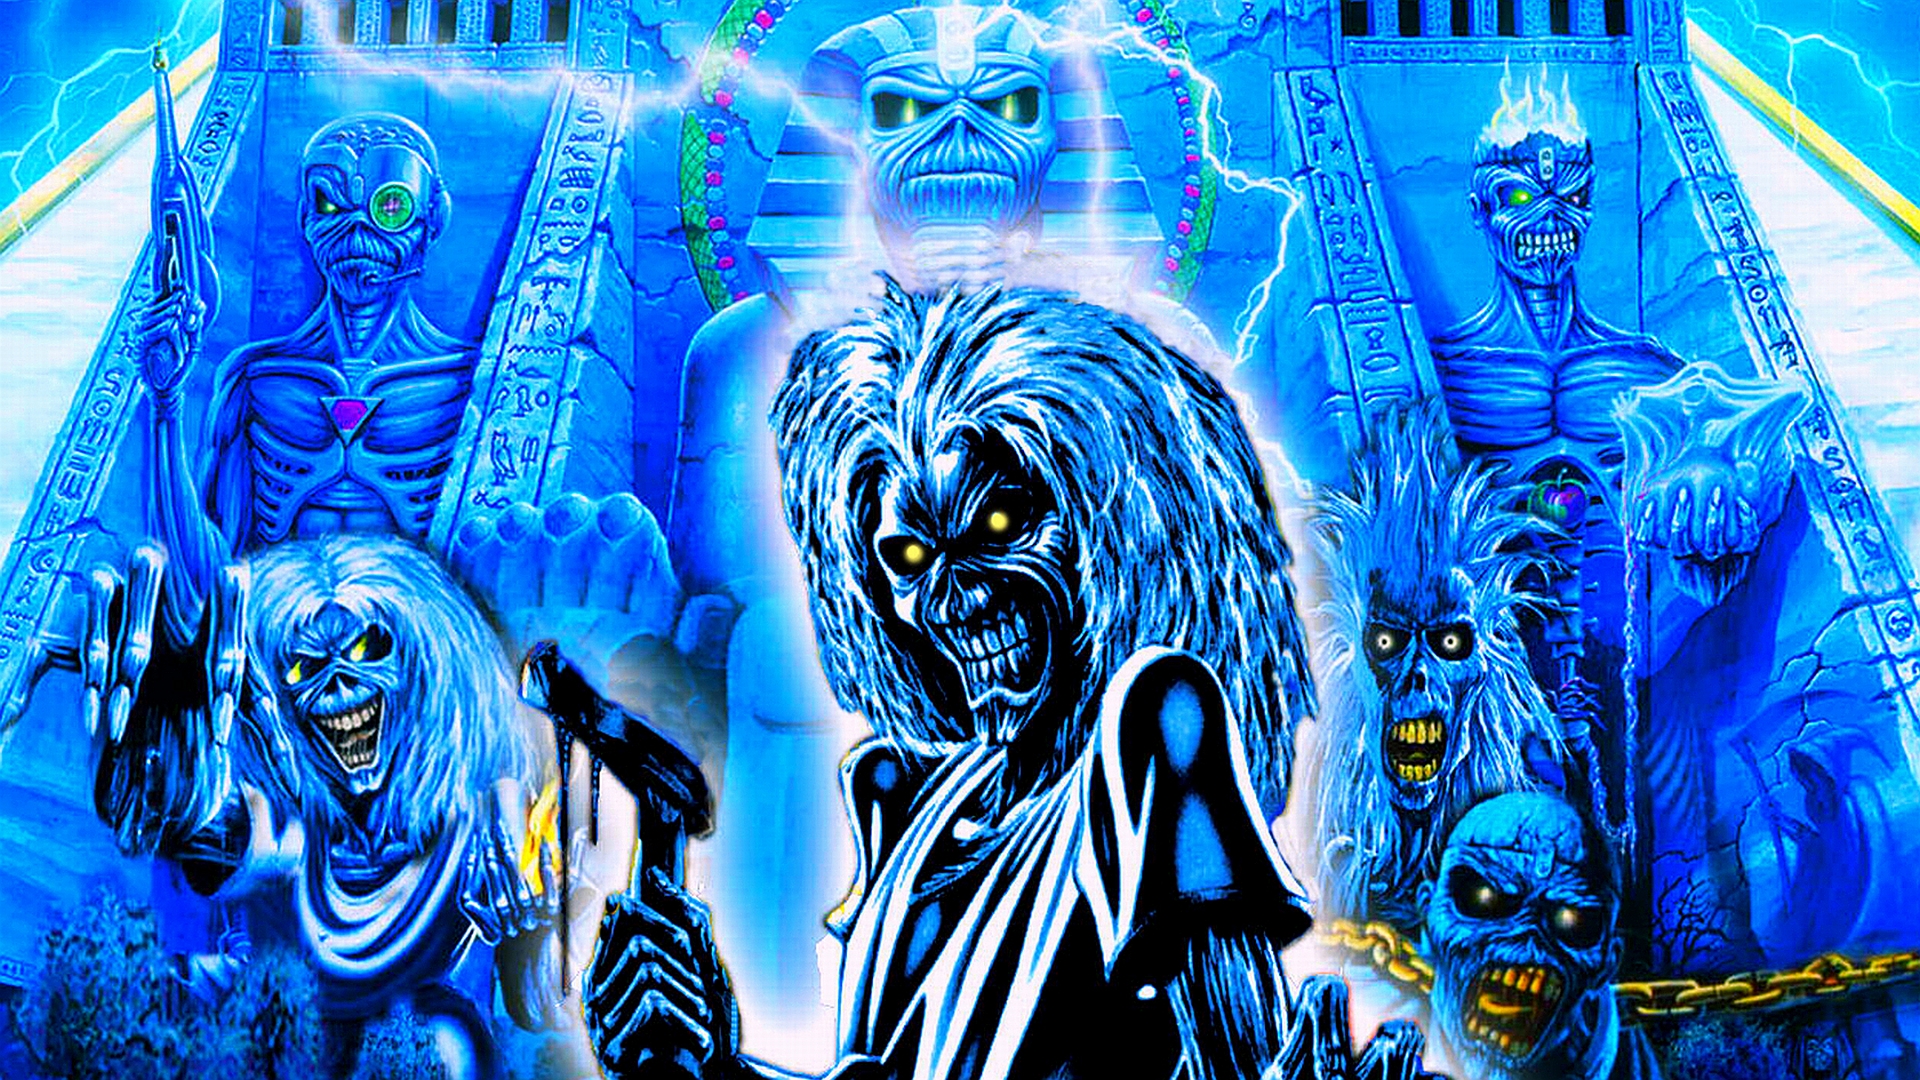 Iron Maiden Bands Groups Entertainment Hard Rock Heavy Metal Eddie